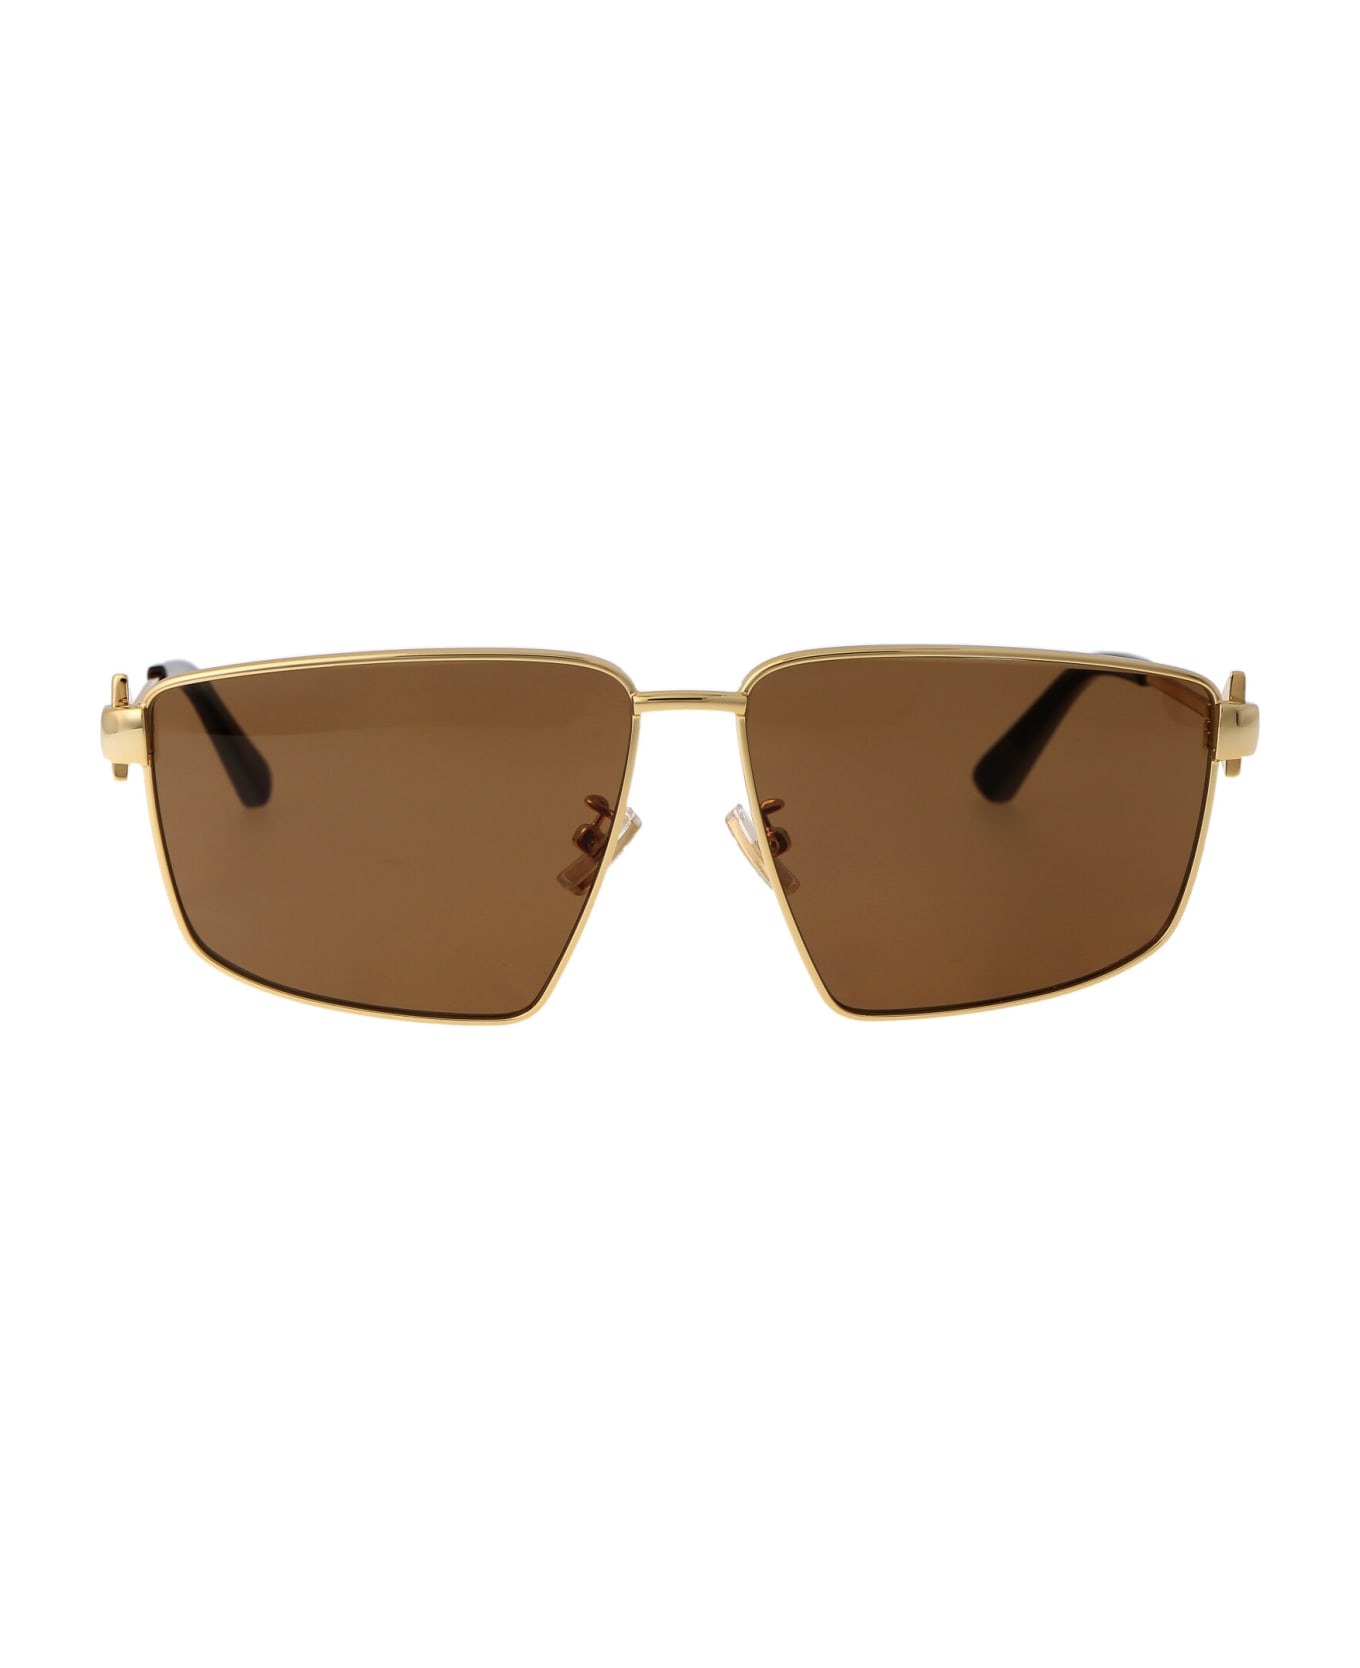 Bottega Veneta Eyewear Bv1223s Sunglasses - 005 GOLD GOLD BROWN